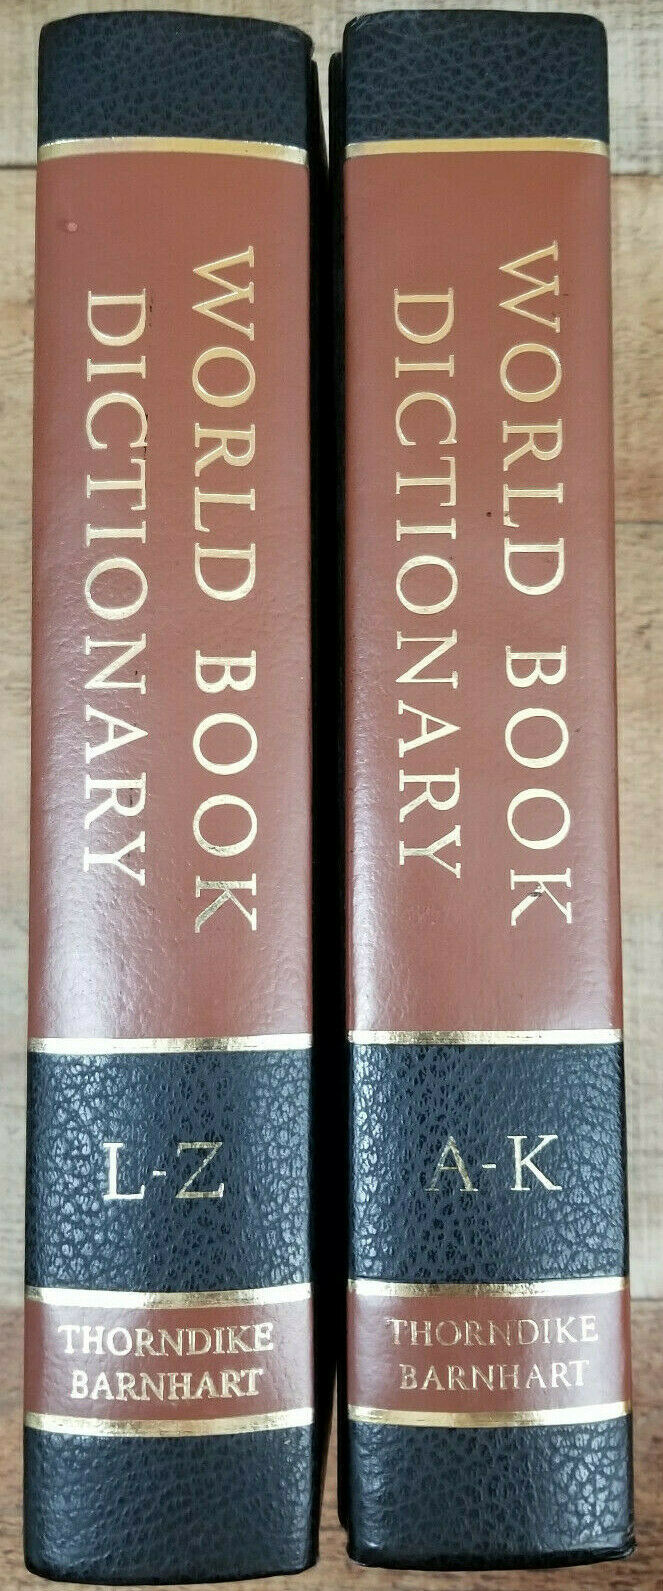 world book dictionary